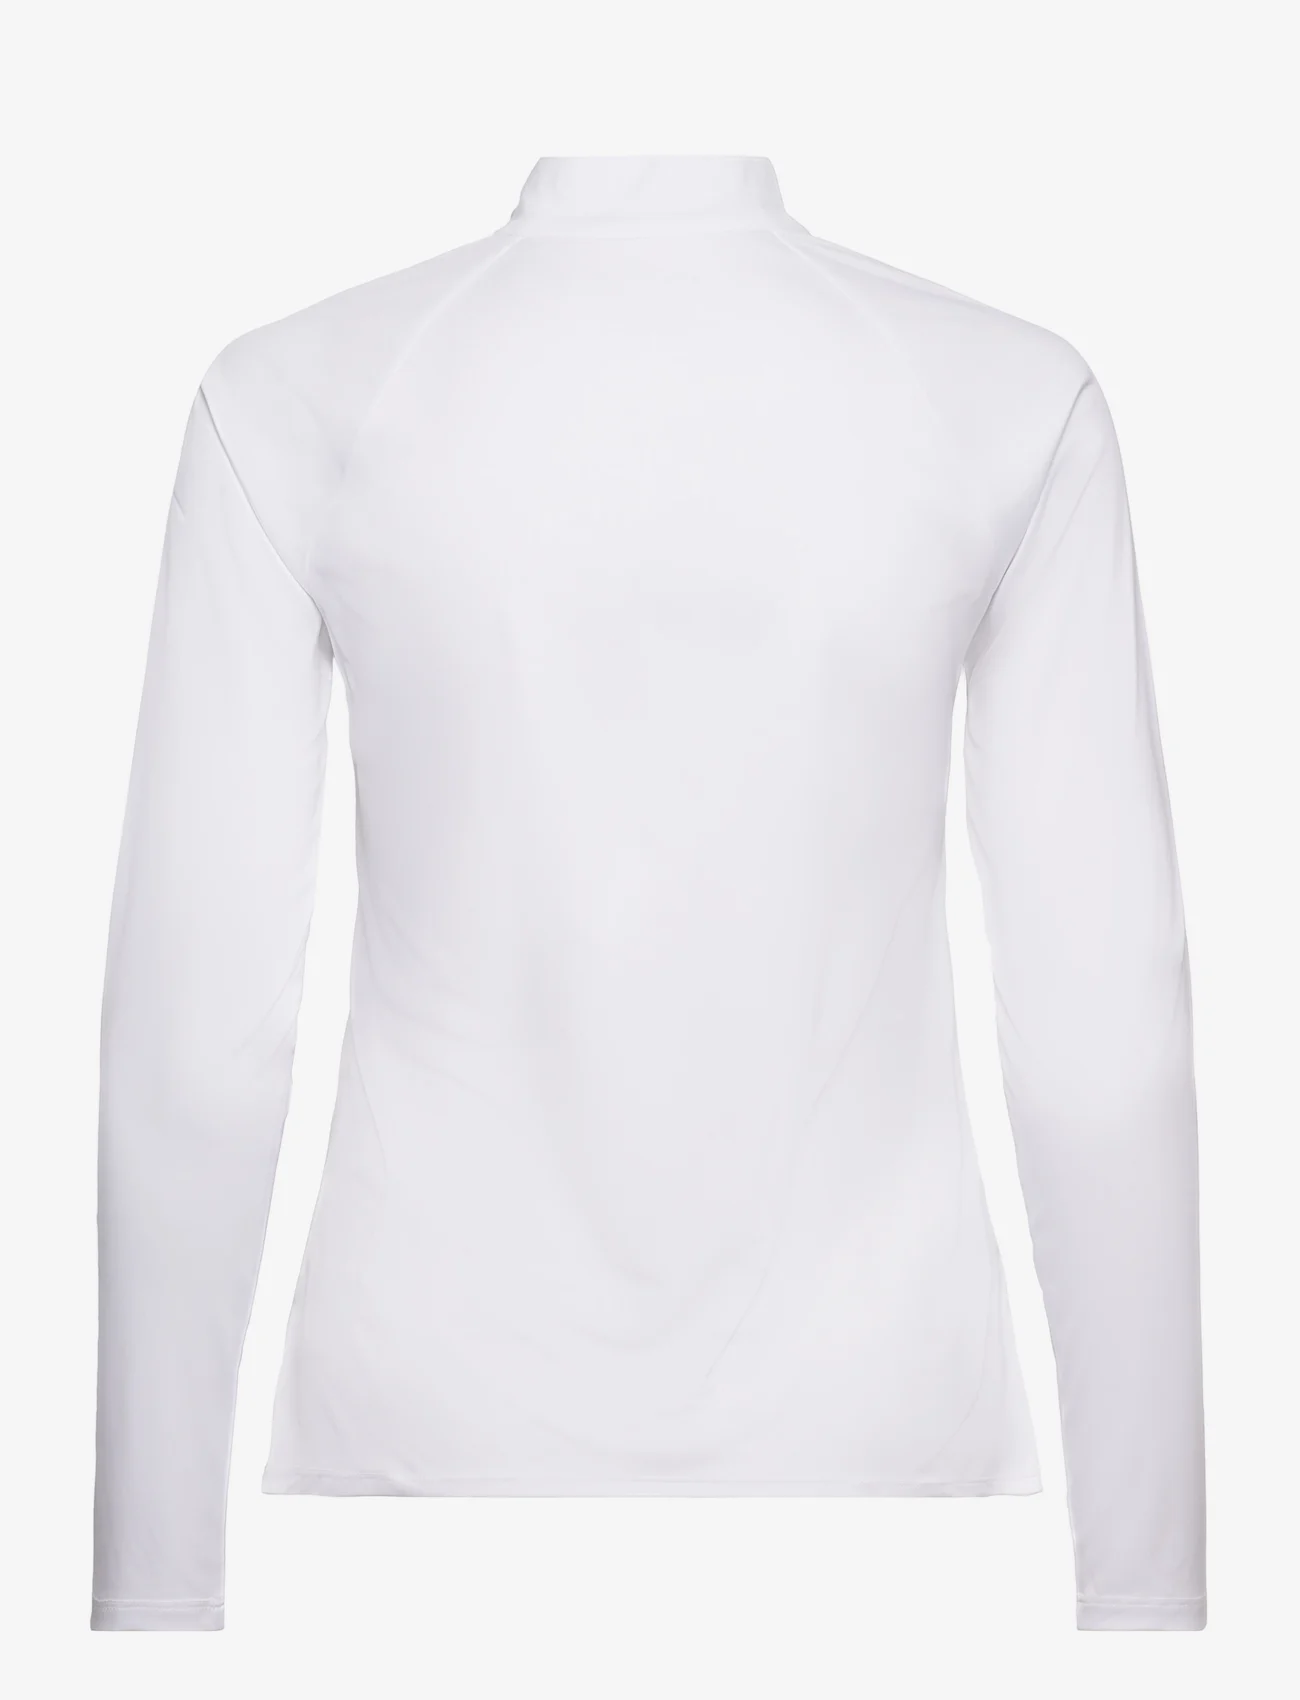 Röhnisch - Addy Long Sleeve - langarmshirts - white - 1